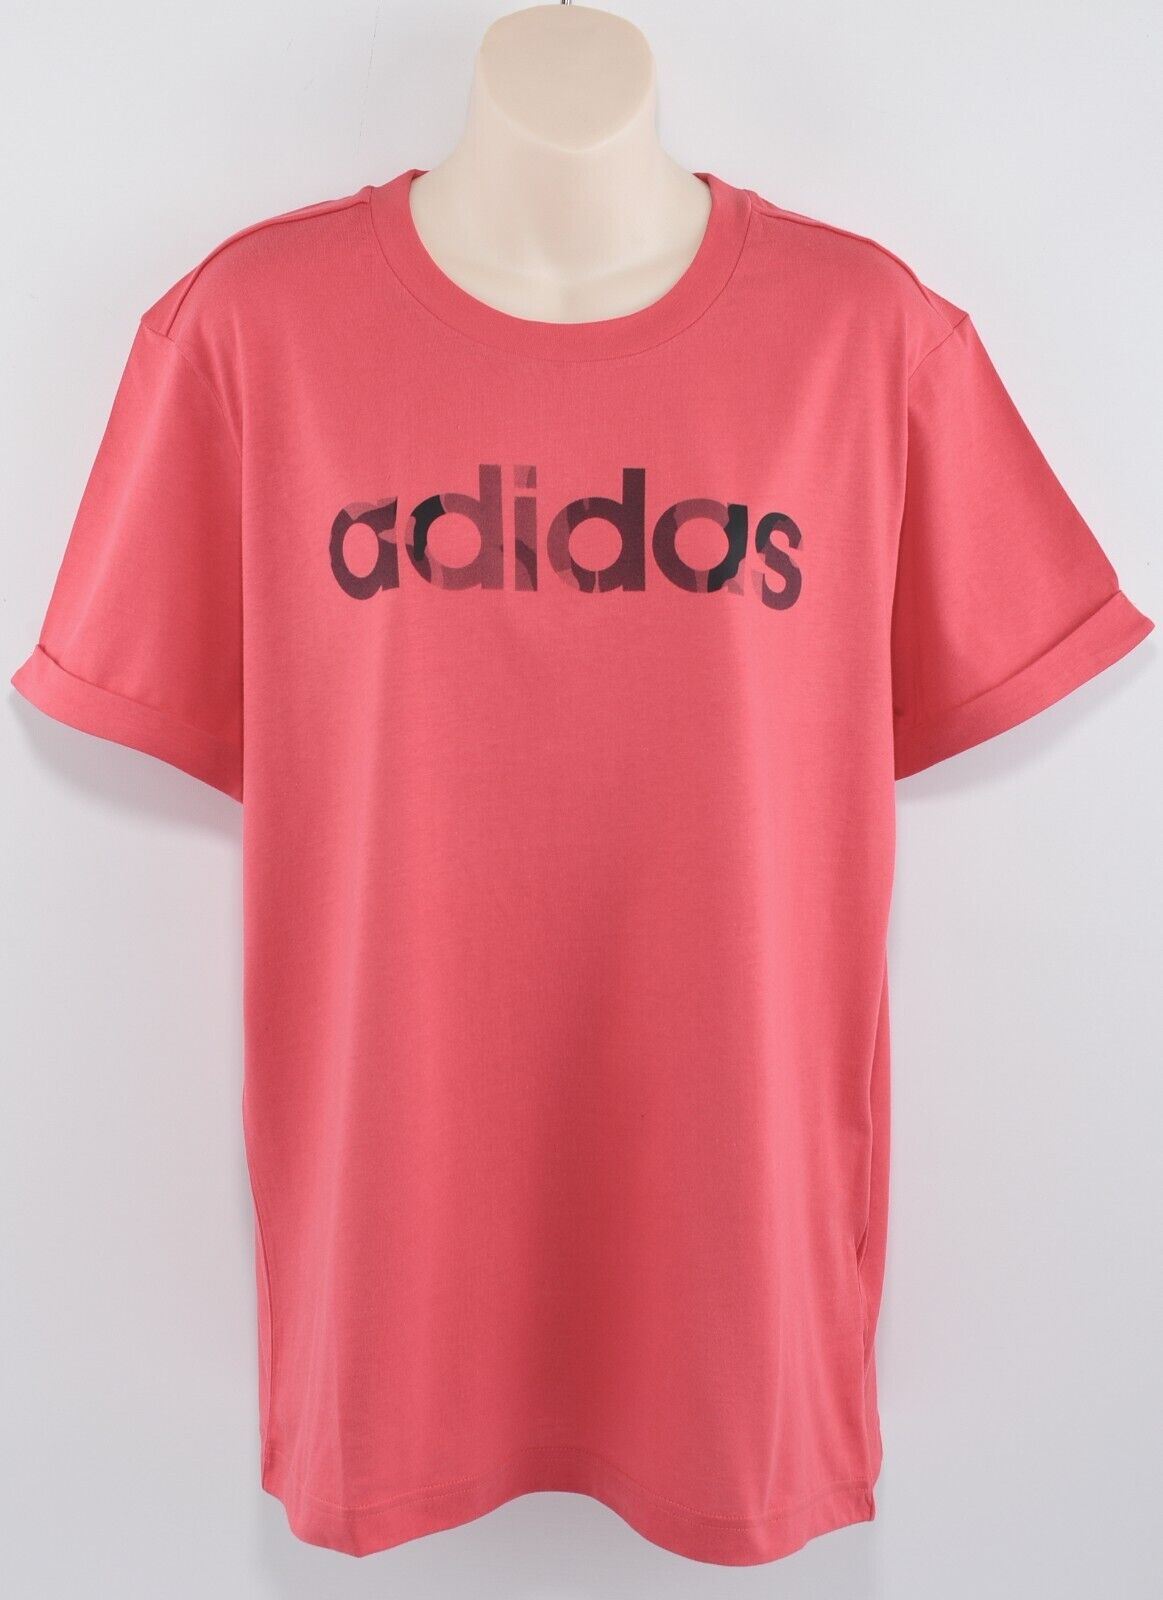 ADIDAS Women's Crew Neck Boyfriend T-shirt, Tee, Glory Red, size S (UK 8-10)